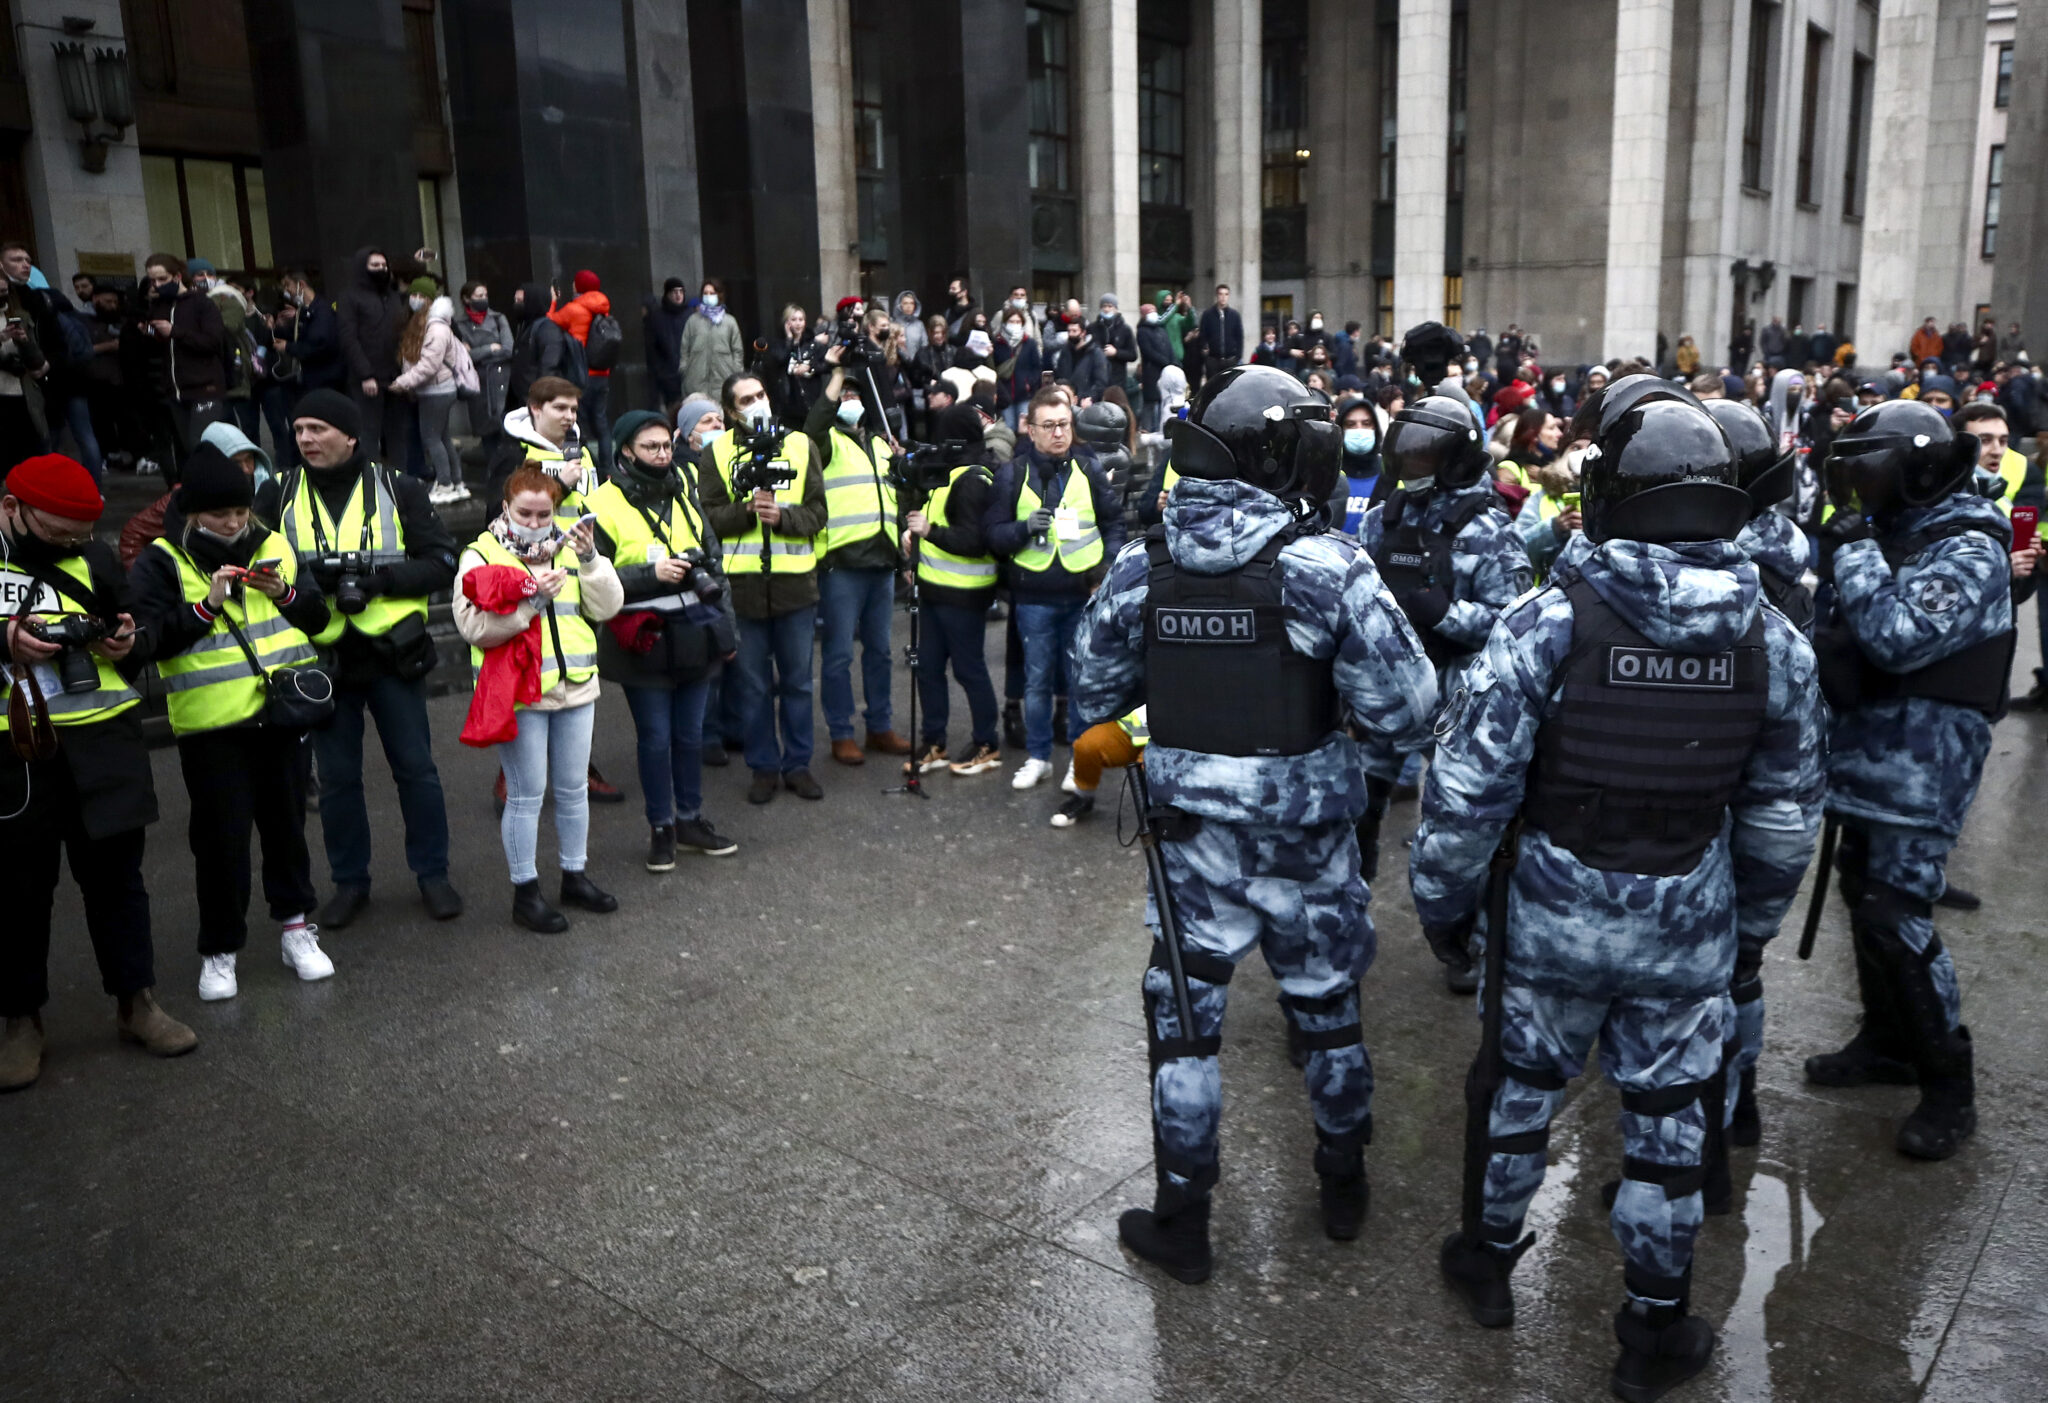 Журналисты стоят напротив сотрудников ОМОНа на акции 21 апреля 2021 г. Фото Valery Sharifulin / TASS / Scanpix / Leta